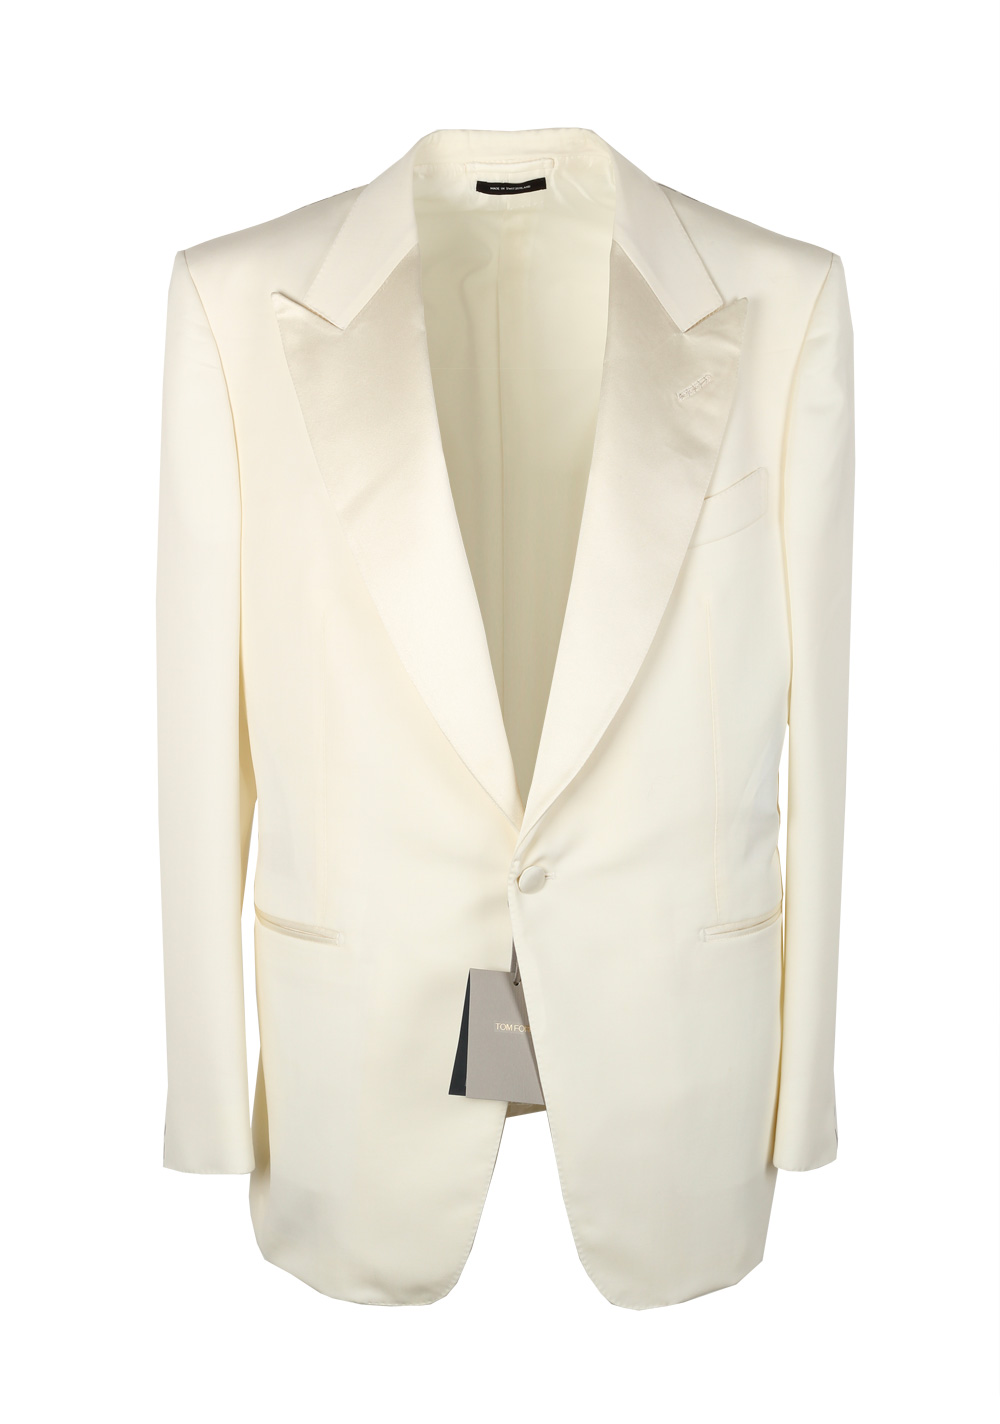 TOM FORD Windsor Ivory Sport Coat Tuxedo Dinner Jacket Size 54 / 44R U ...